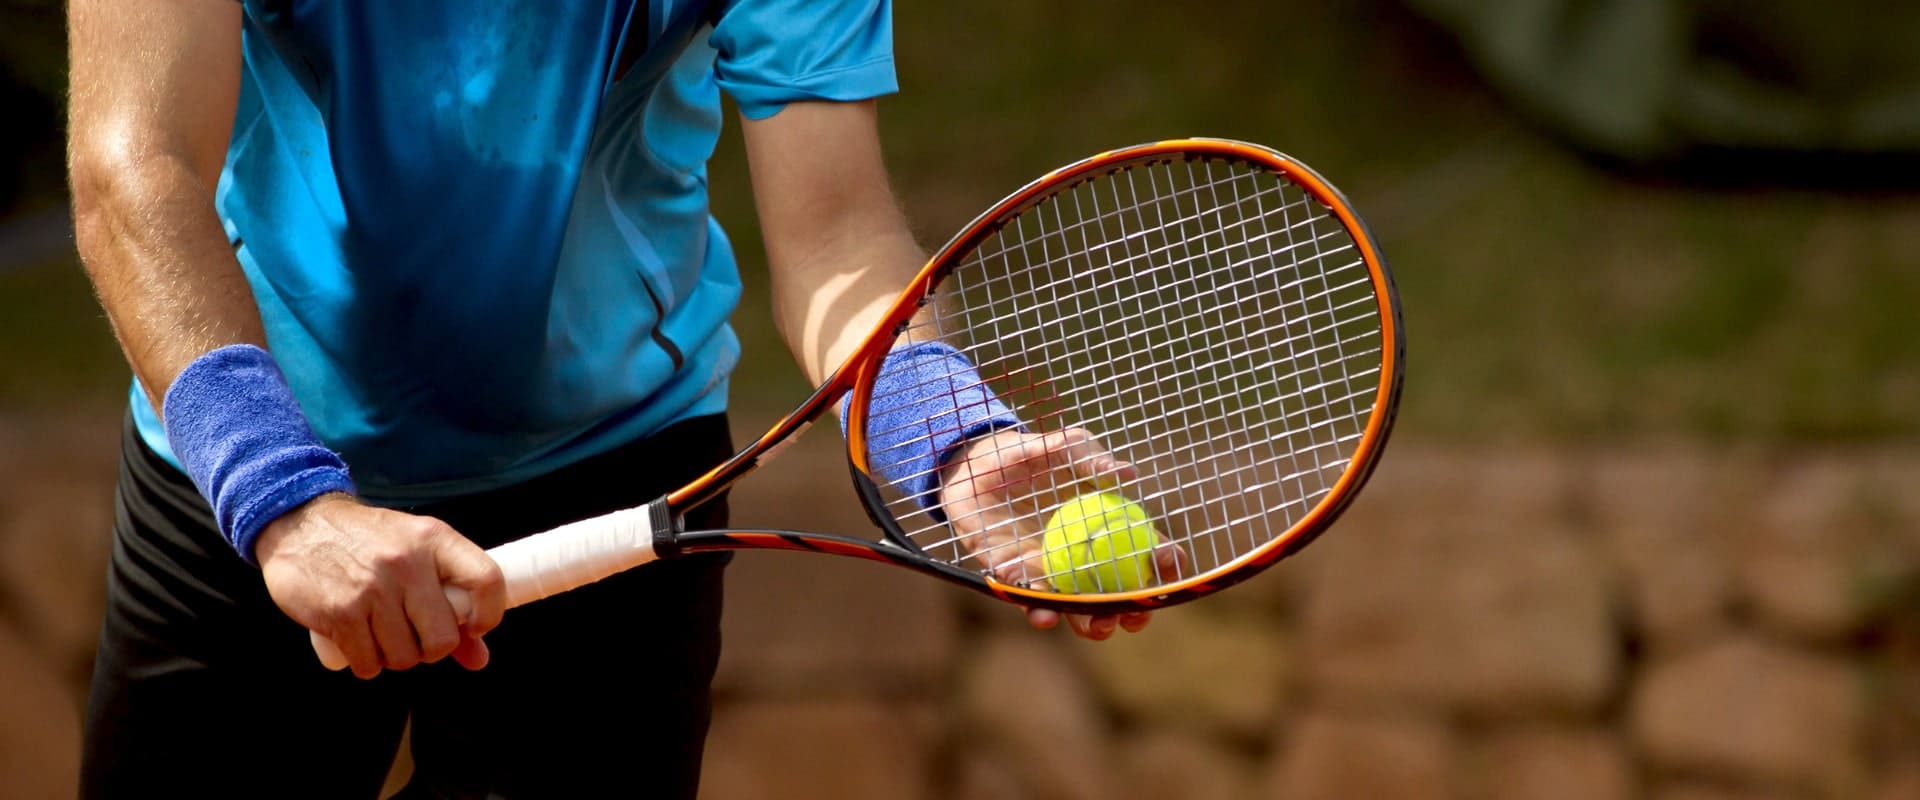 nauka gry w tenisa warszawa